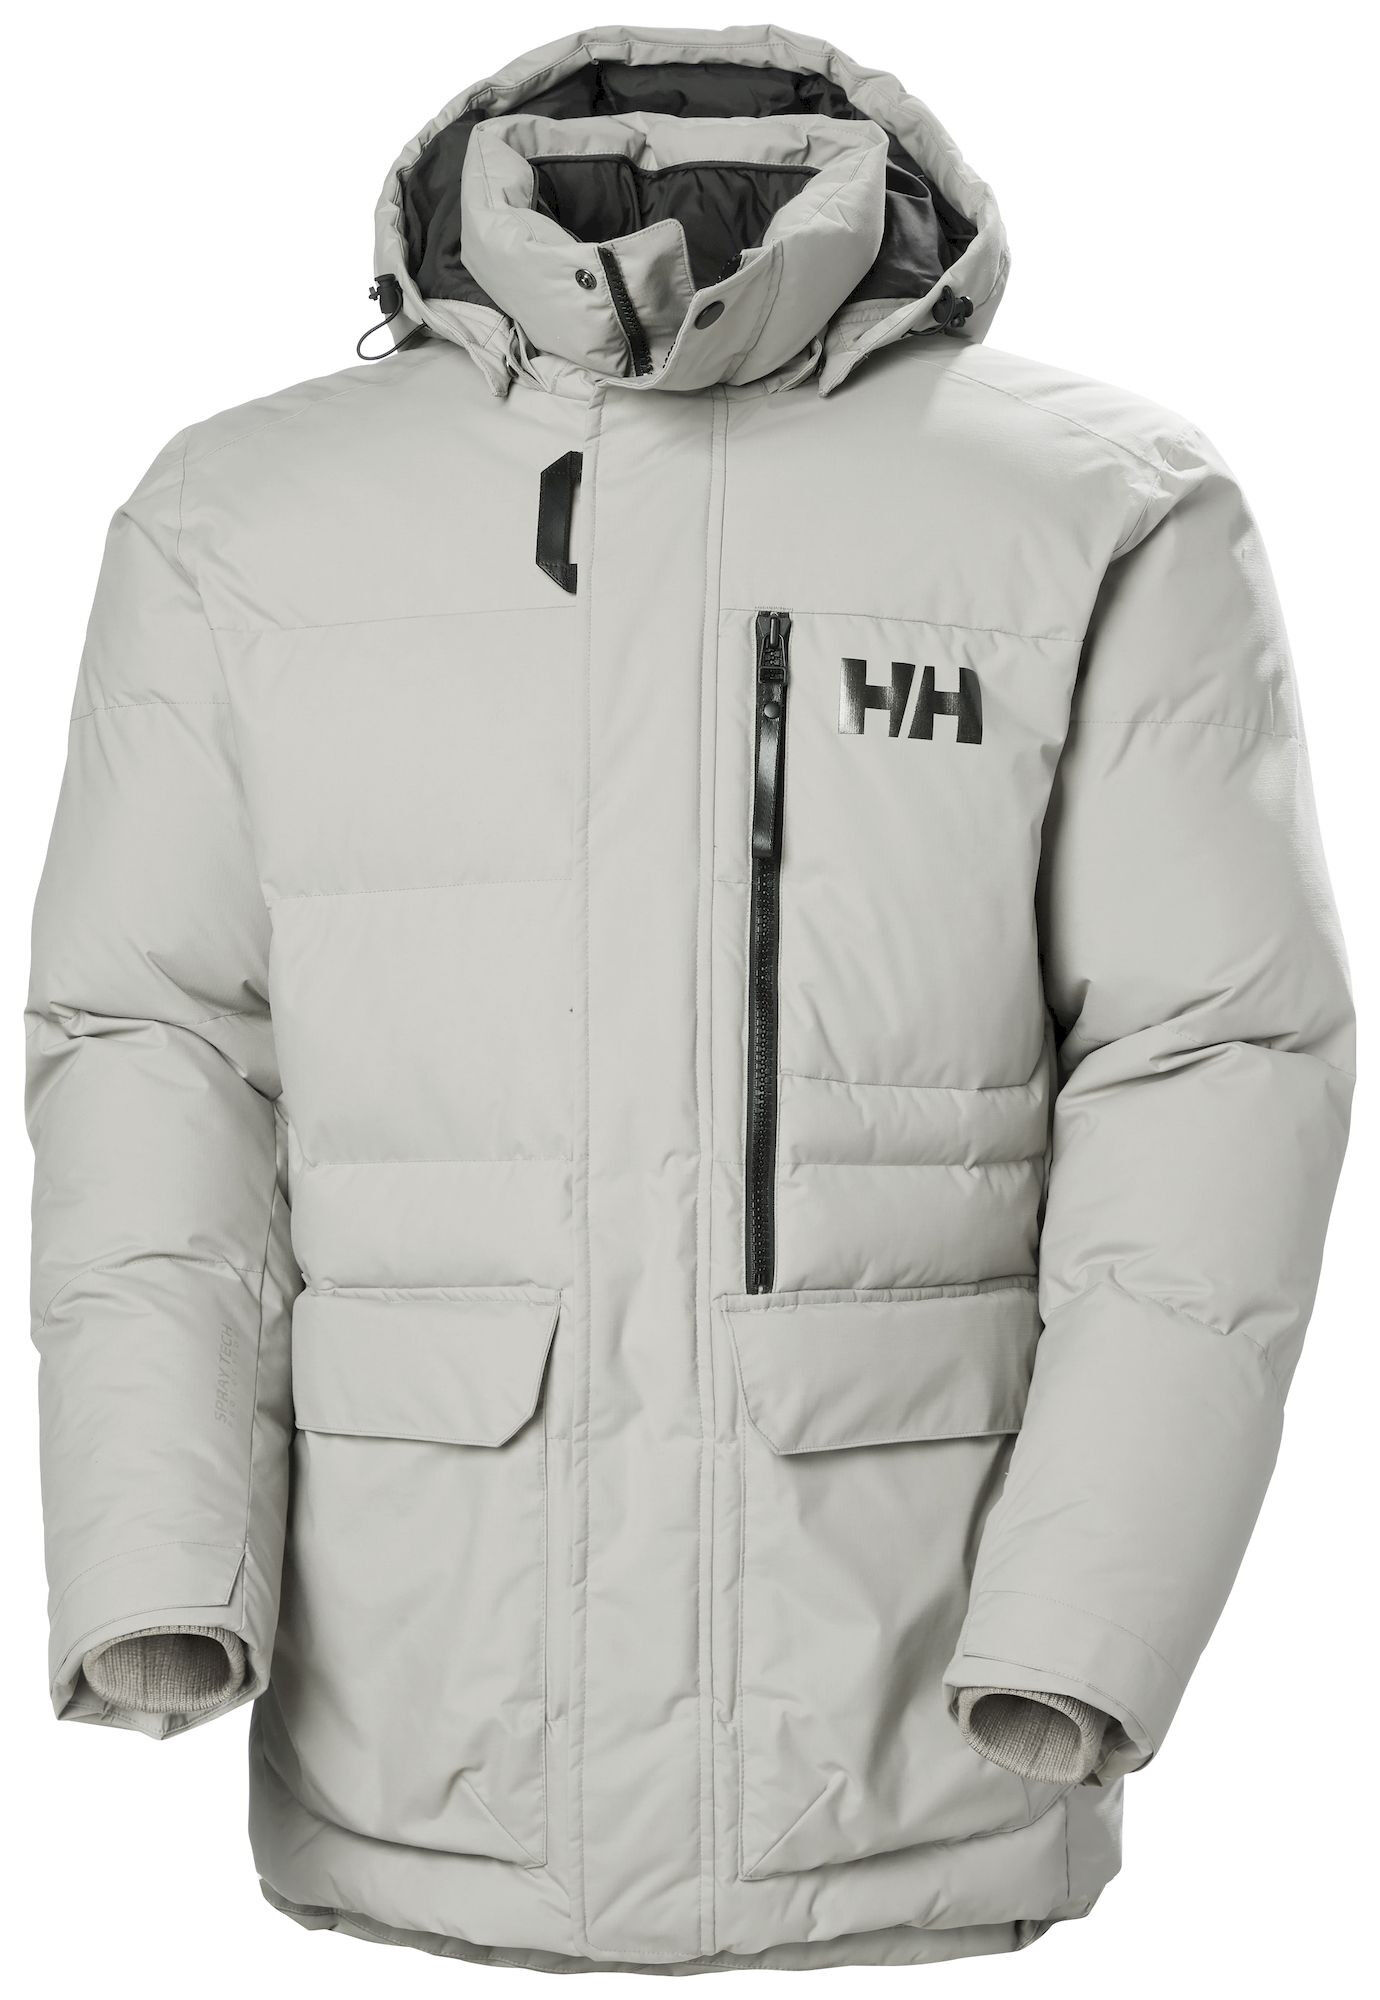 Helly Hansen Tromsoe Jacket - Chaqueta de fibra sintética - Hombre